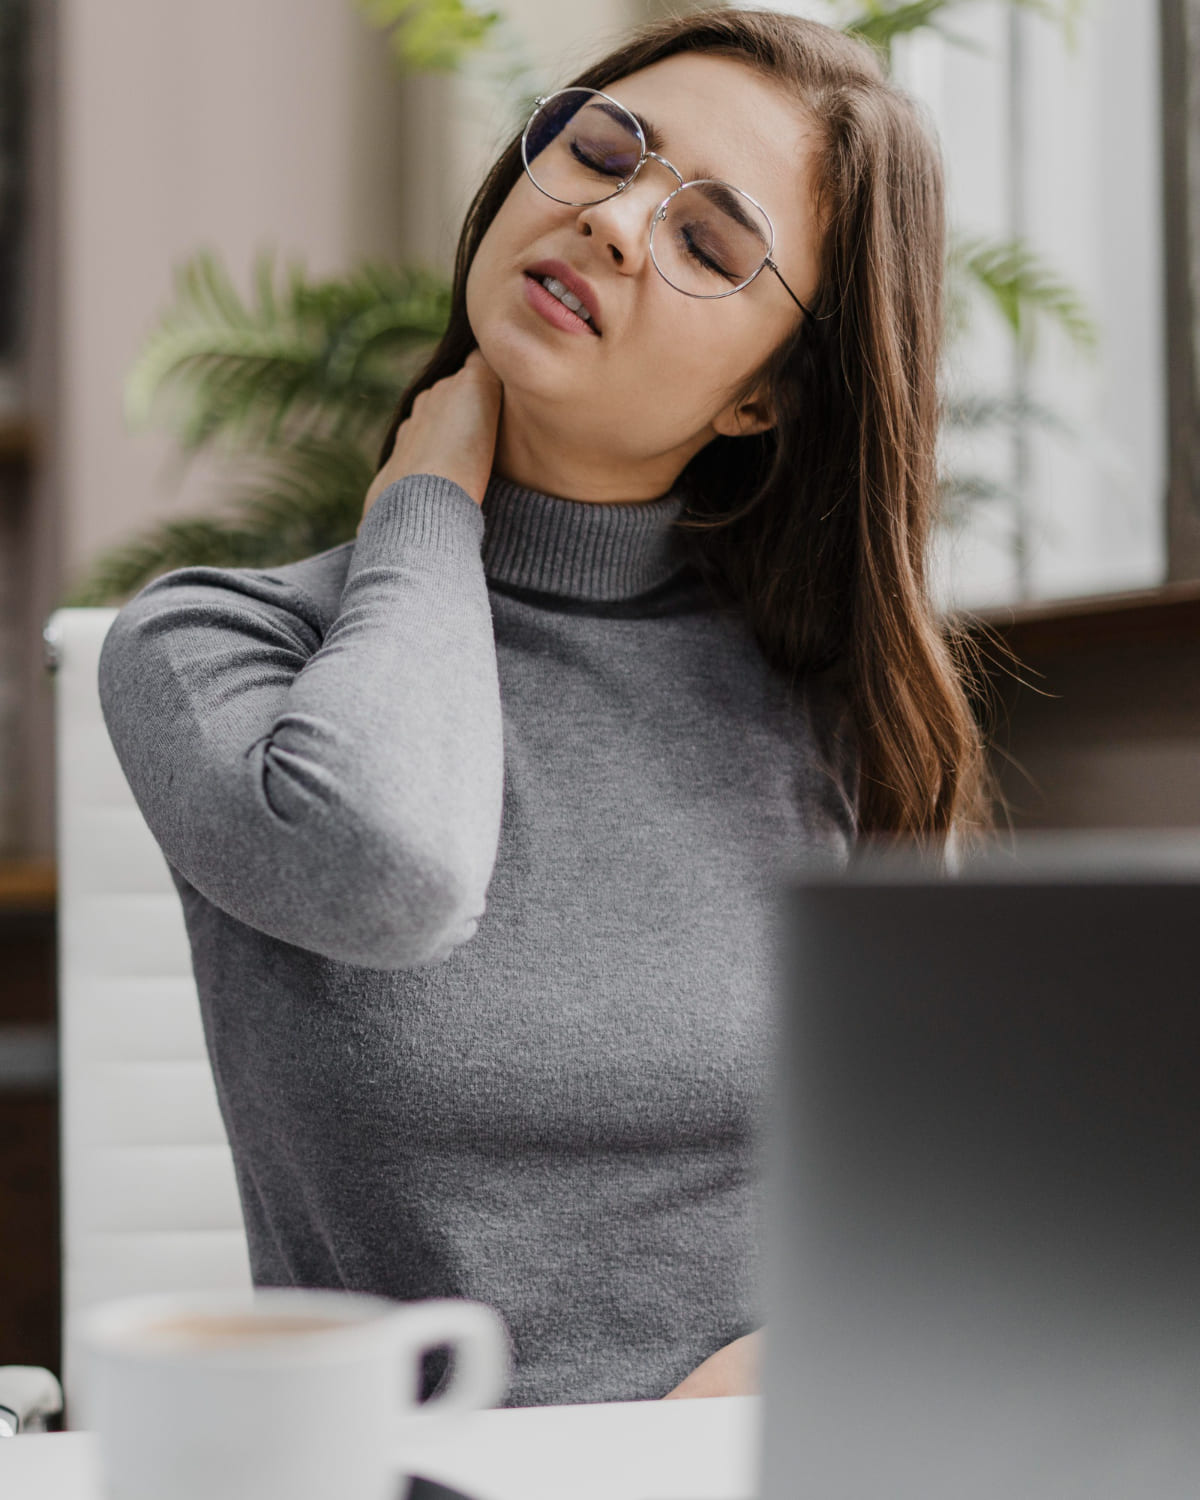 woman having neck pain